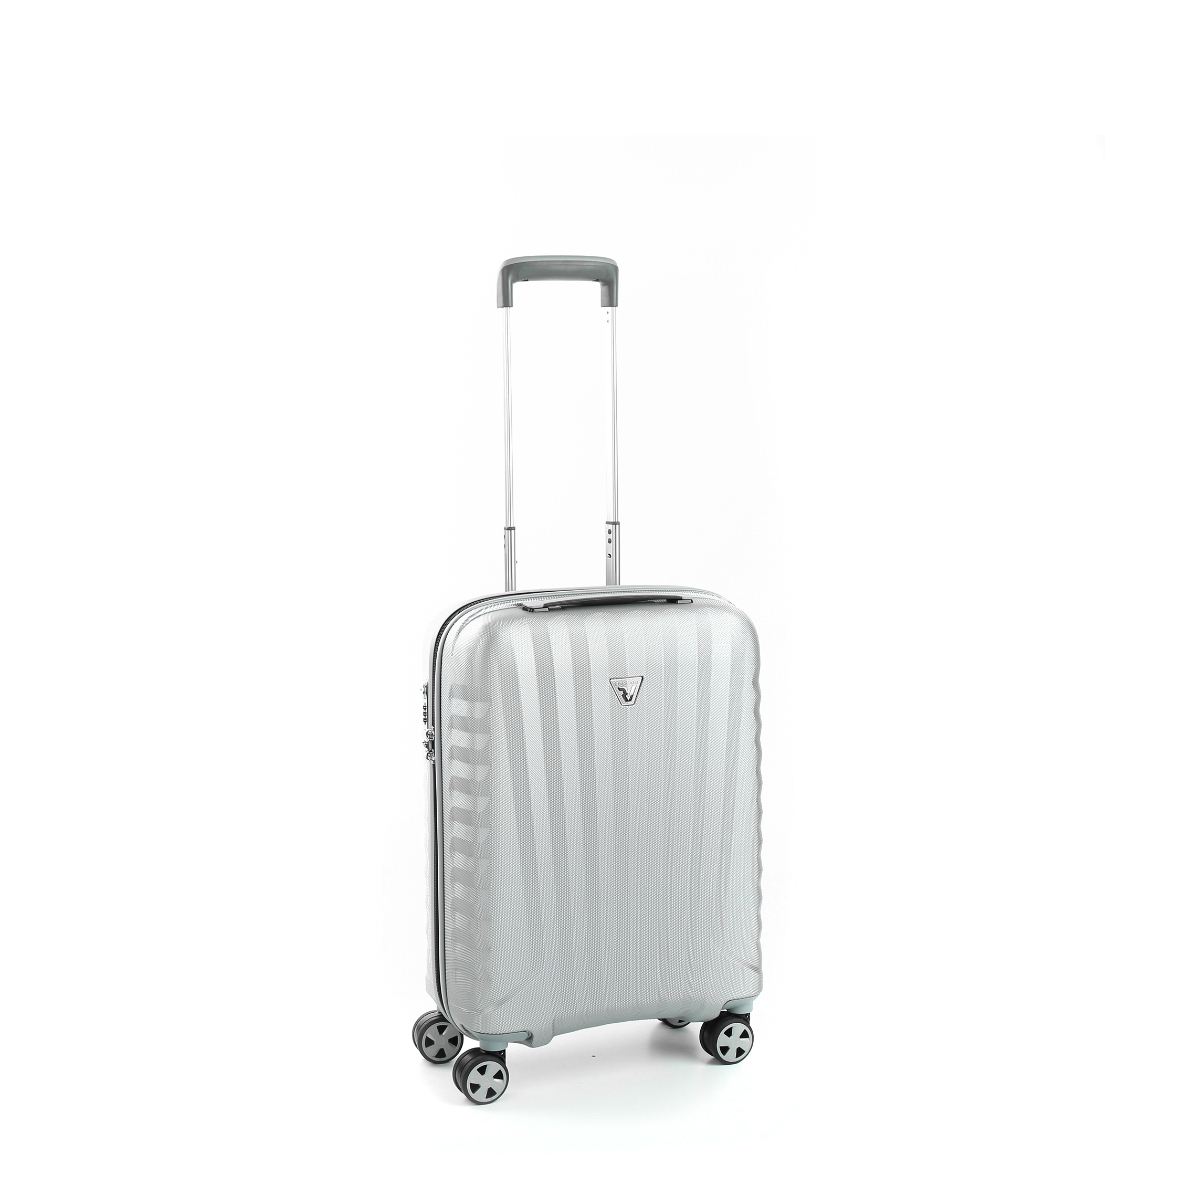 RONCATO ロンカート スーツケース 31L 機内持ち込みサイズ イタリア製 10年保証 頑丈 軽量 UNO ZSL PREMIUM 5463